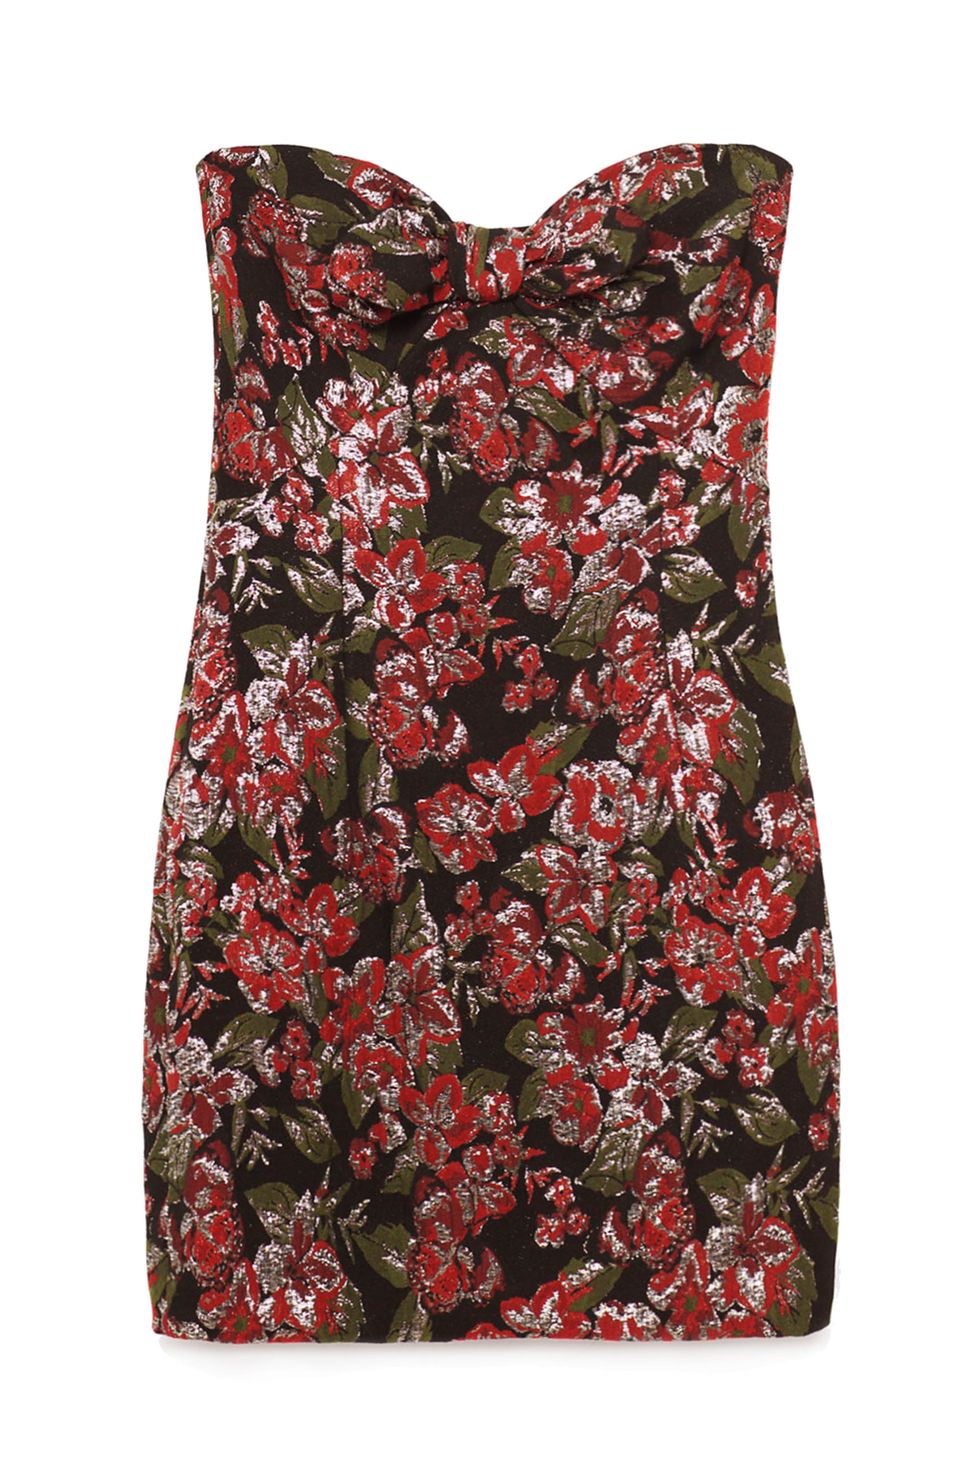 <p>Zara Jacquard Mini Dress, $70; <a href="http://www.zara.com/us/en/woman/dresses/jacquard-mini-dress-c269185p3919038.html" target="_blank">zara.com</a></p>